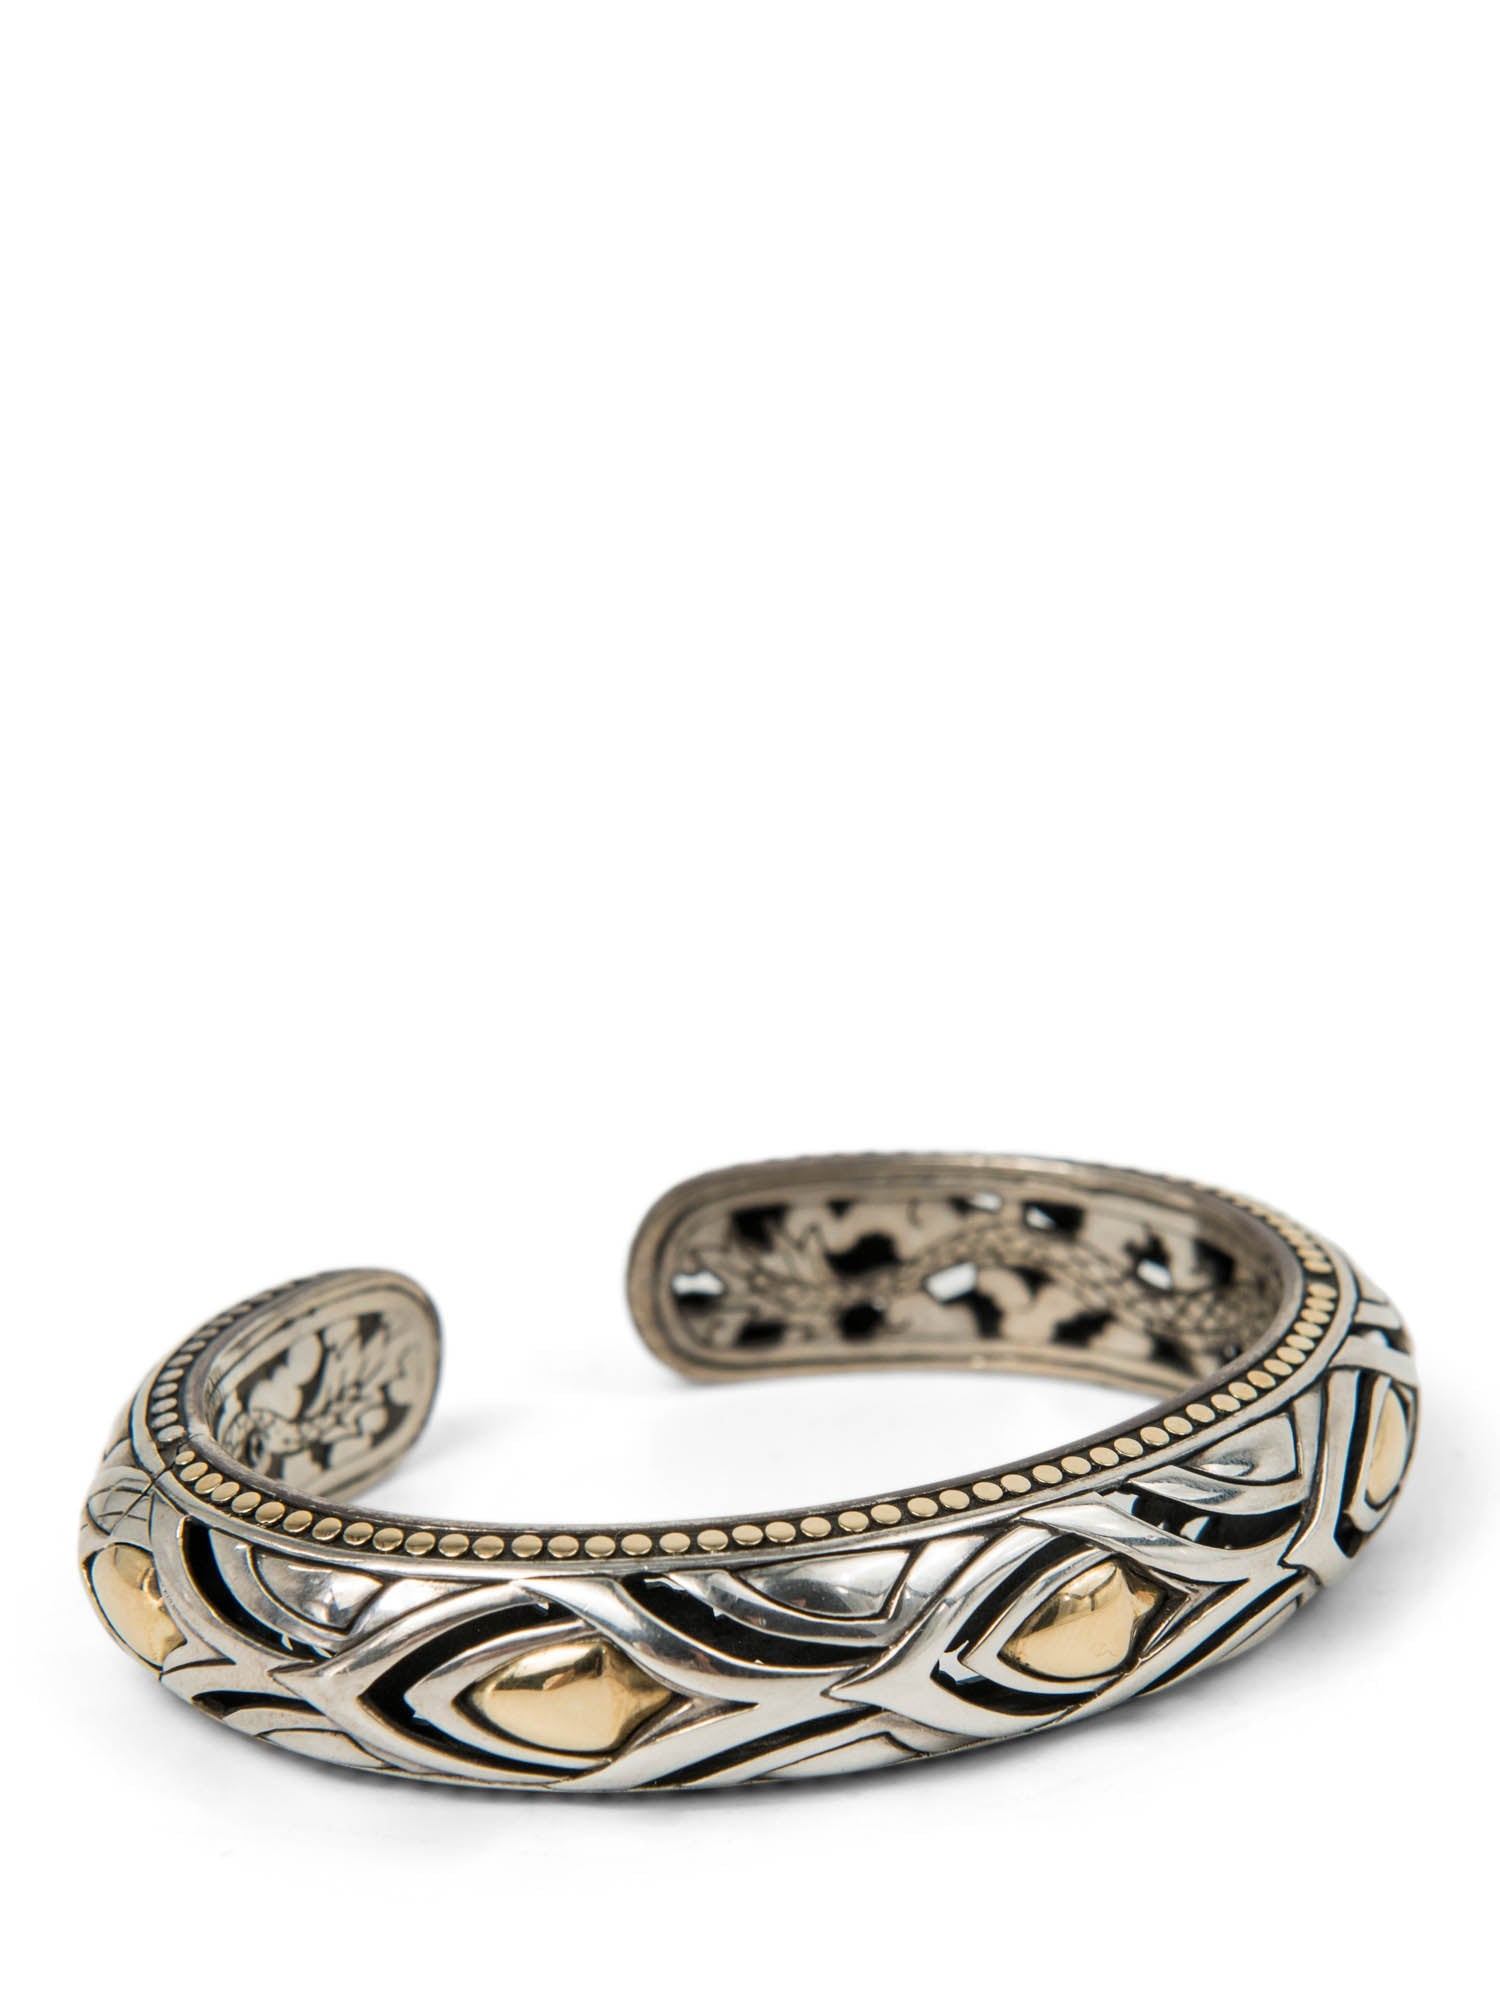 John Hardy 18K Gold Sterling Silver Cuff Bracelet